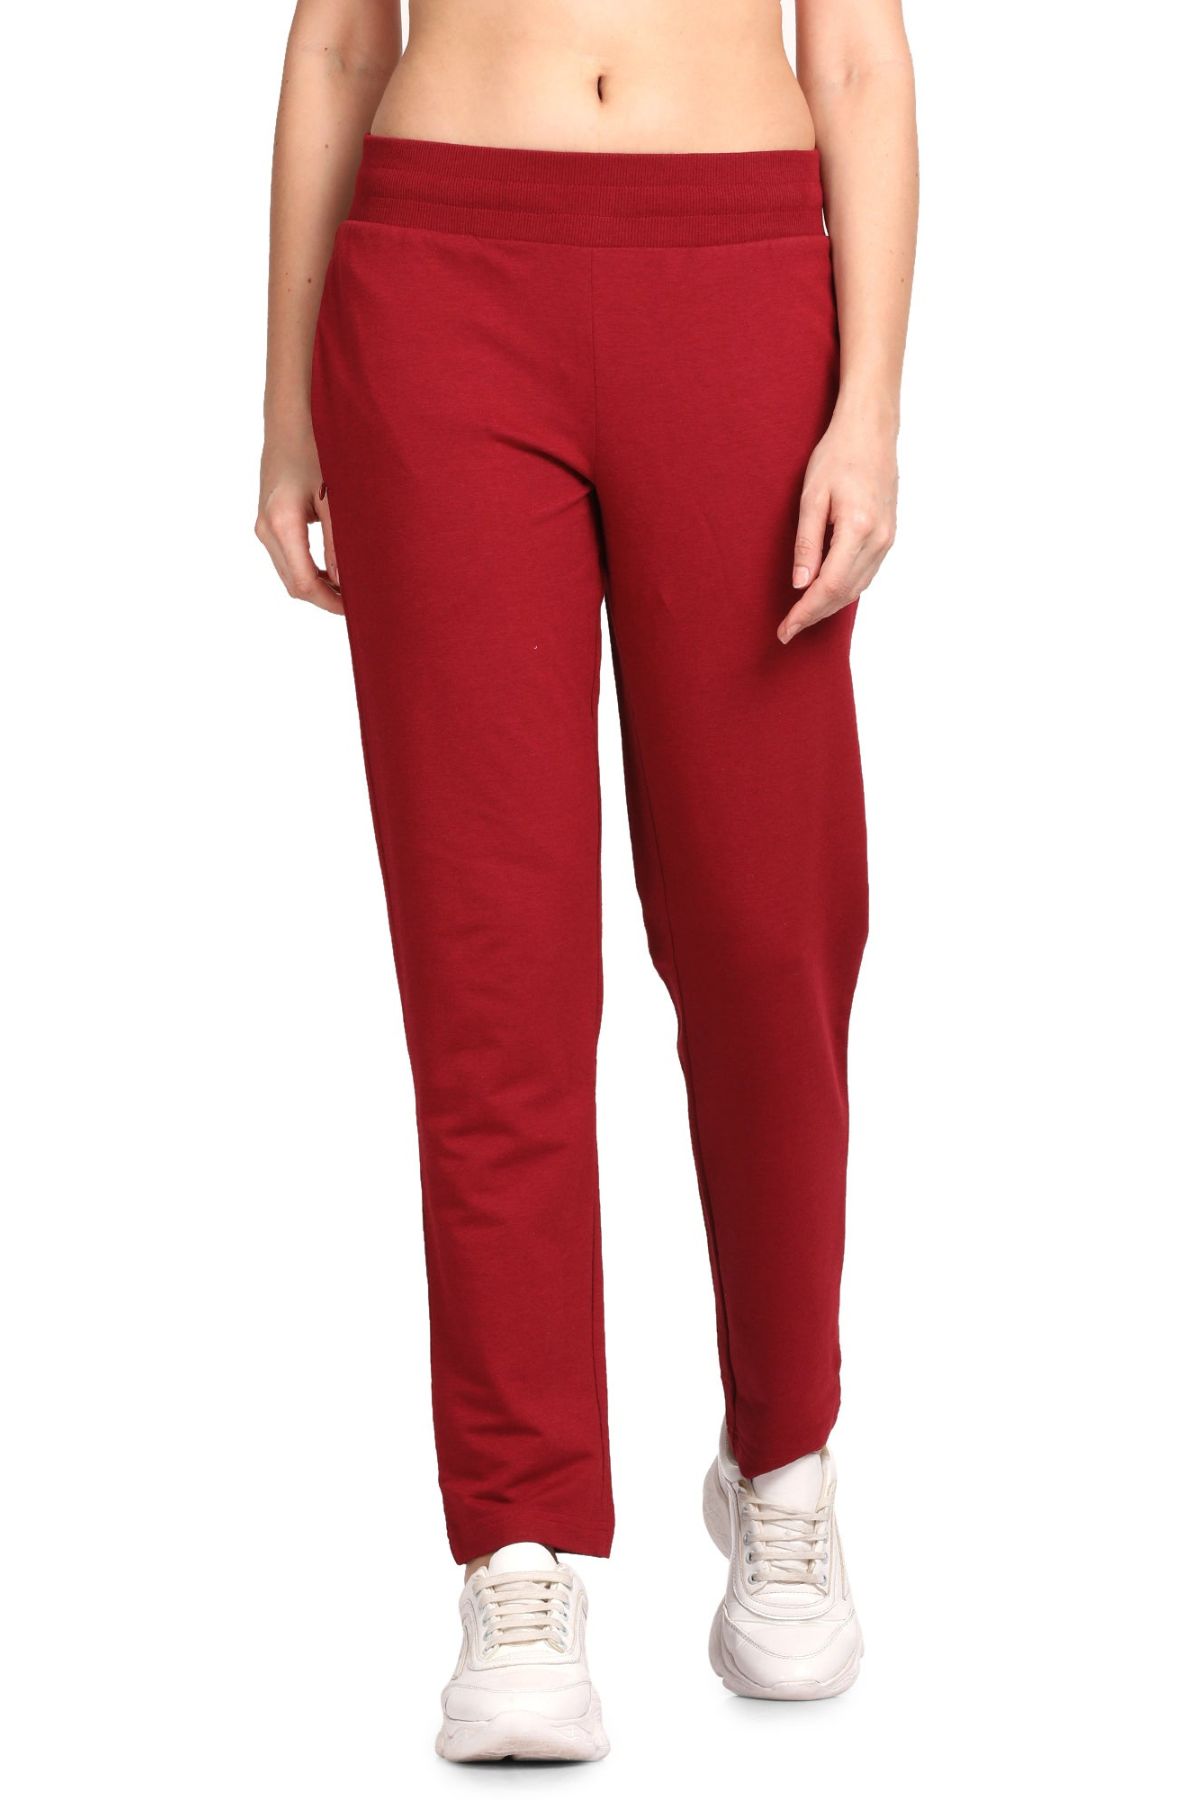 ASOS DESIGN oversized cargo trousers in red | ASOS